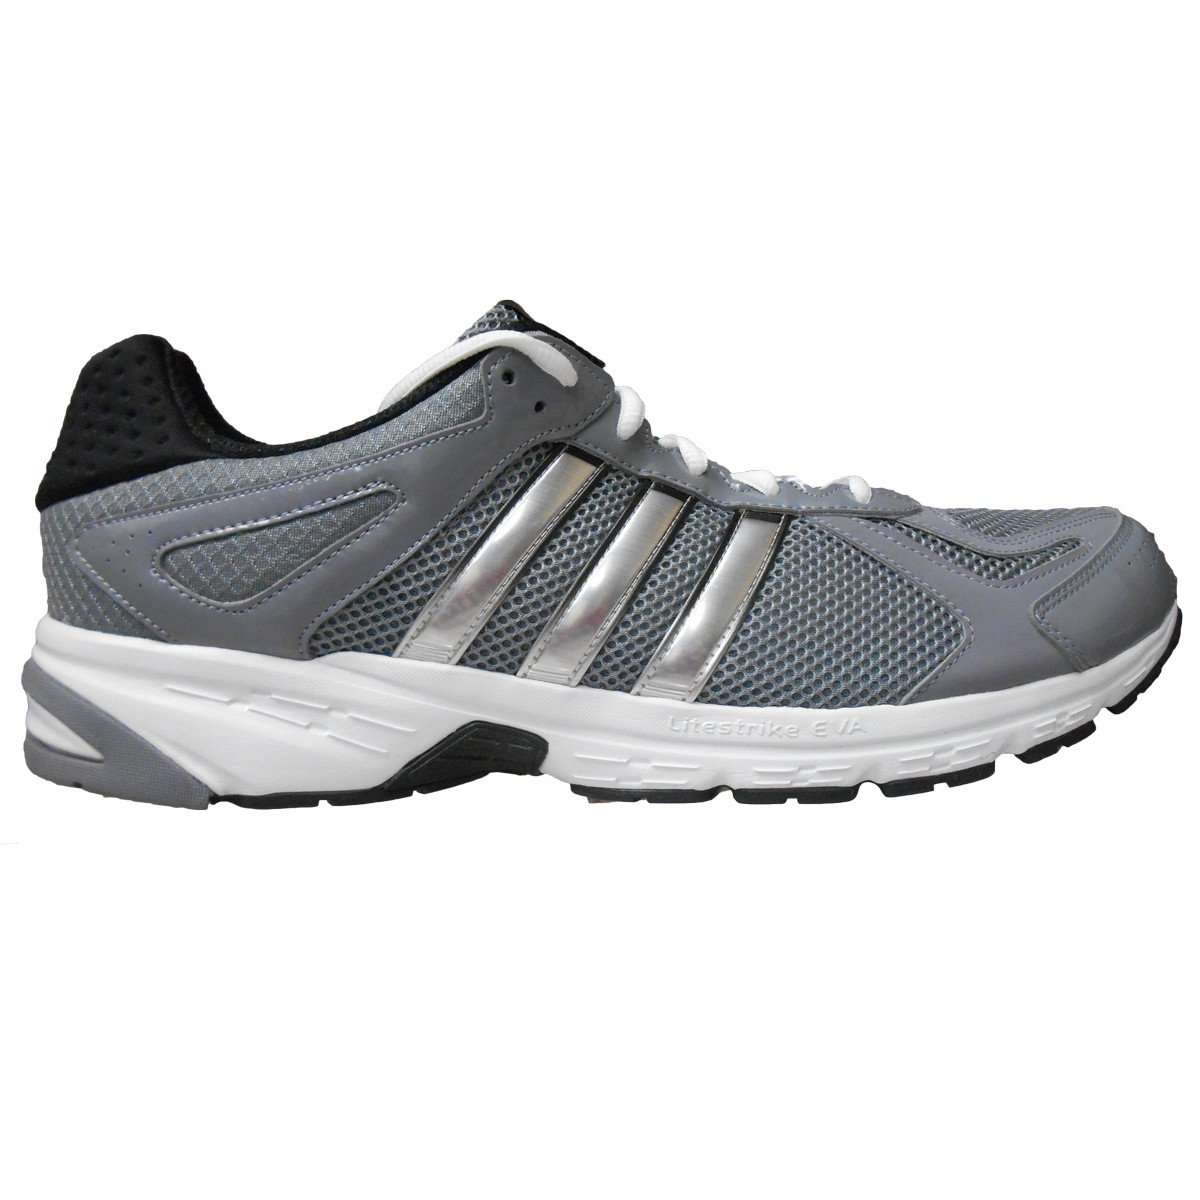 adidas Duramo 5 Men's Running Shoes 